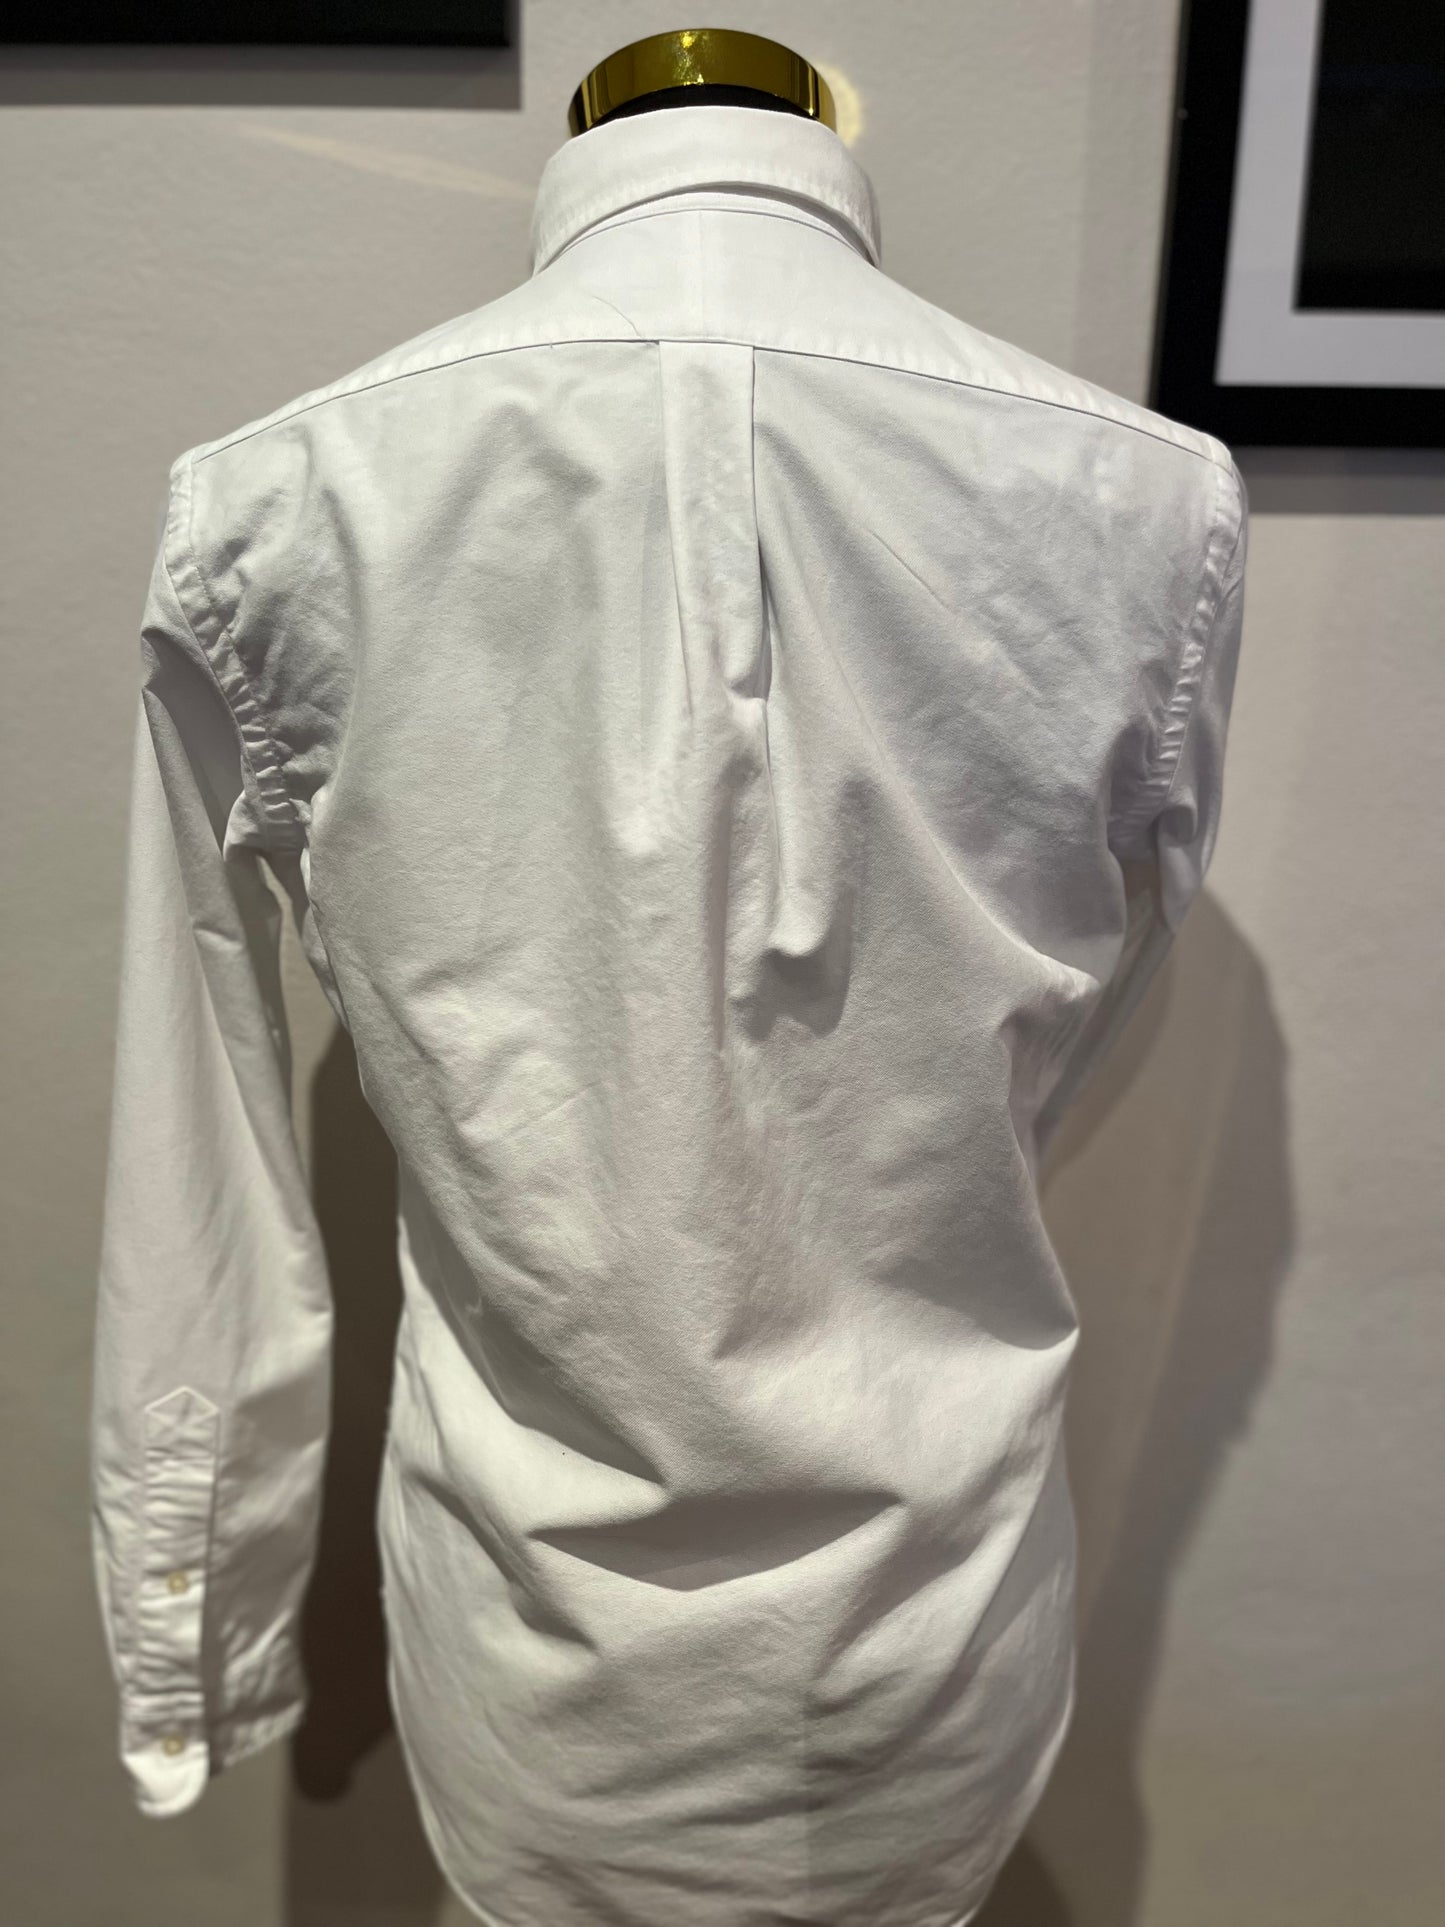 Ralph Lauren 100% Cotton White Oxford Shirt Size S Classic Fit Button Down Collar